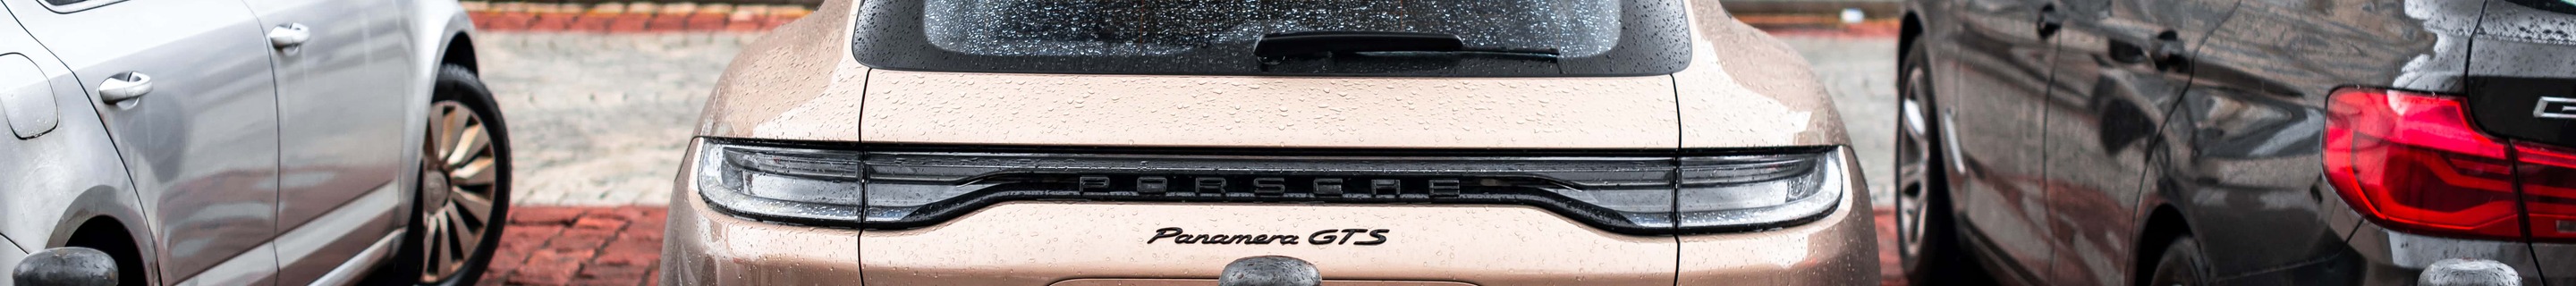 Porsche 971 Panamera GTS Sport Turismo MkII